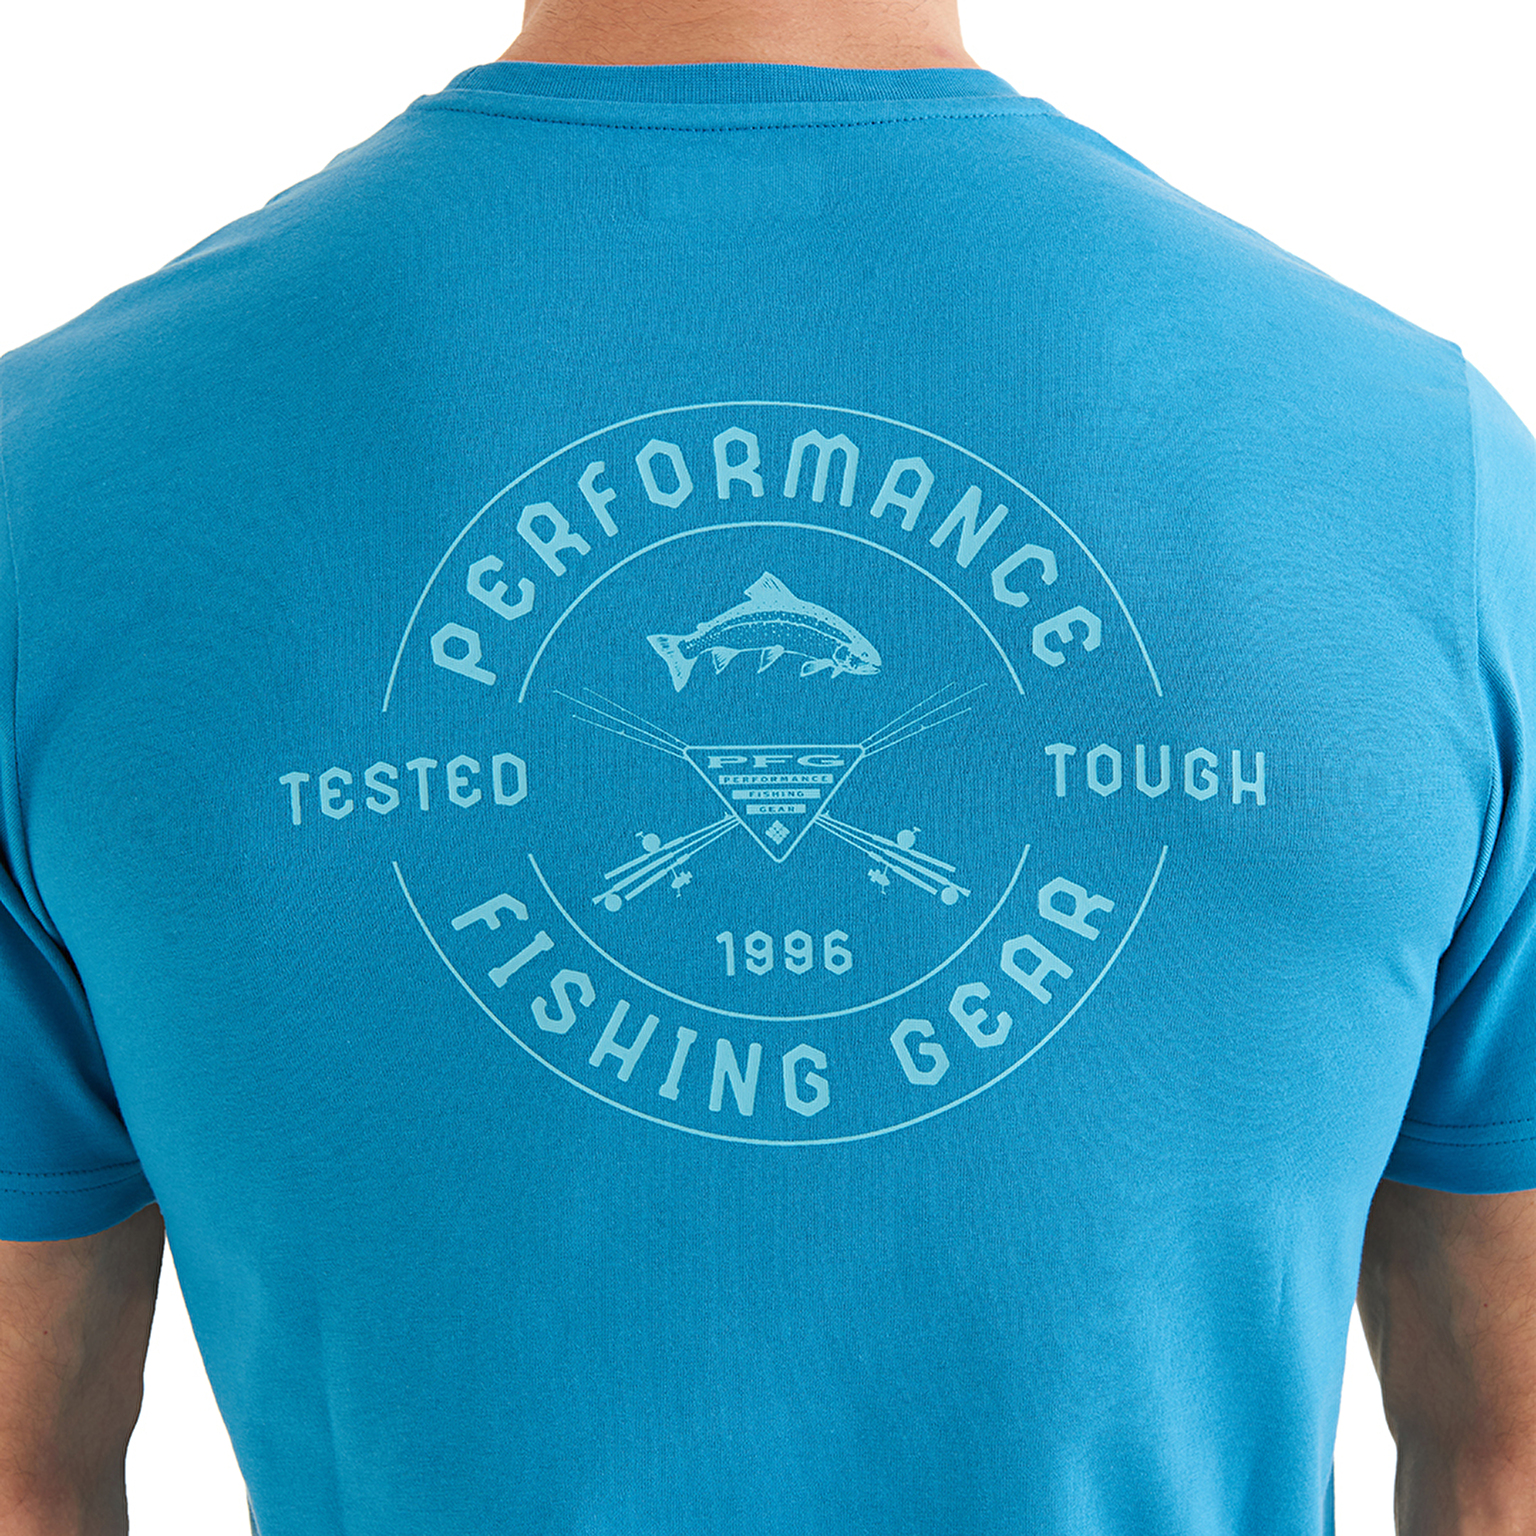 CSC PFG Tested Tough Erkek Kısa Kollu T-shirt